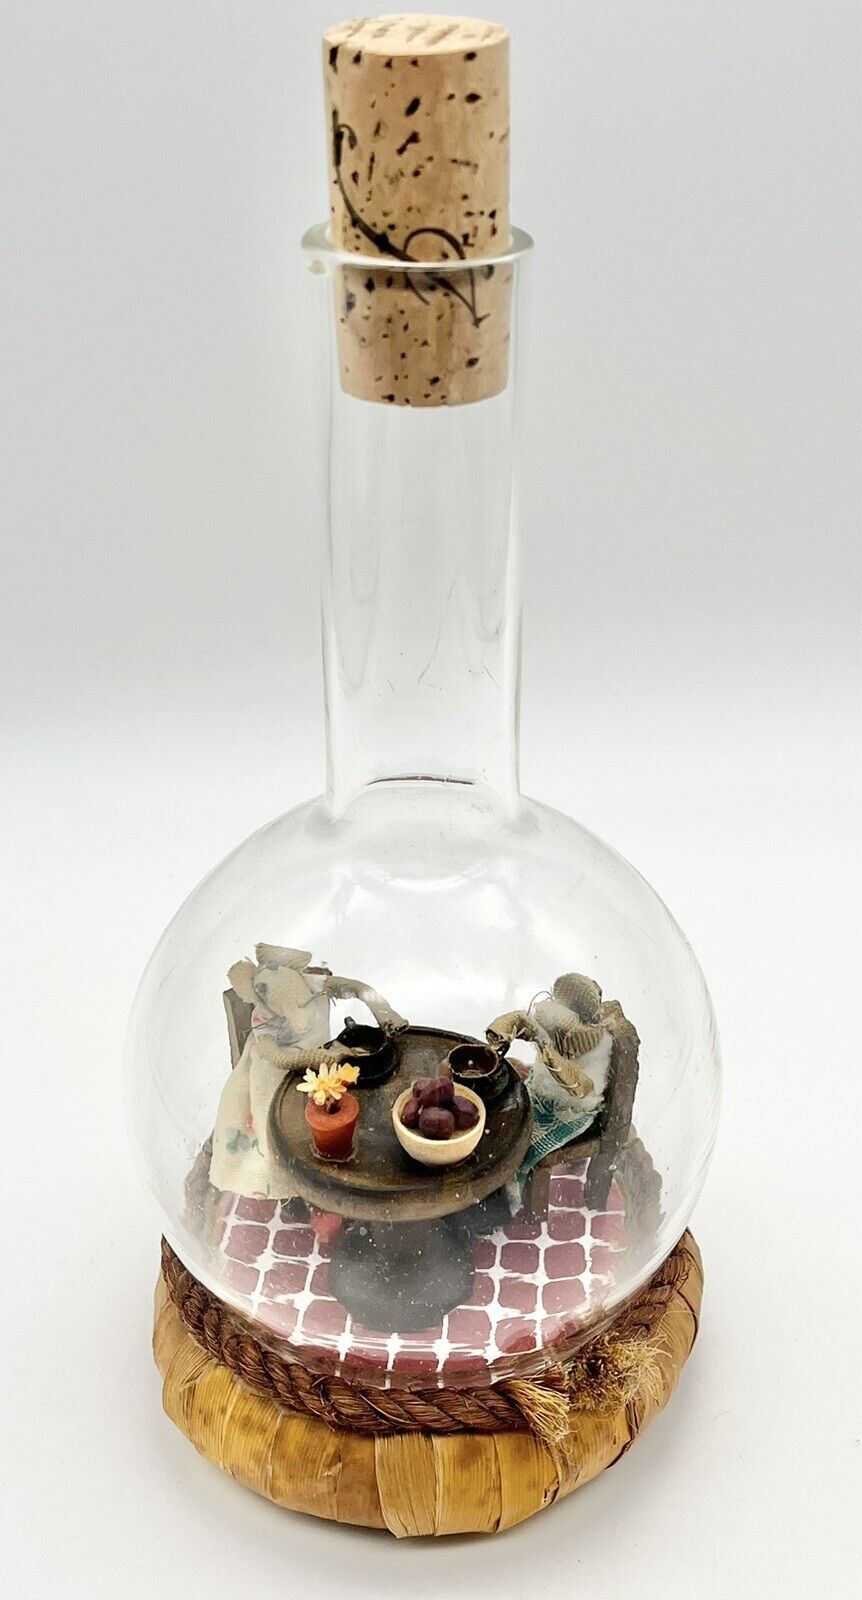 Vintage 1974 Enesco Burlap Mice Diorama in Glass Bottle Tea Party Kitchen Scene